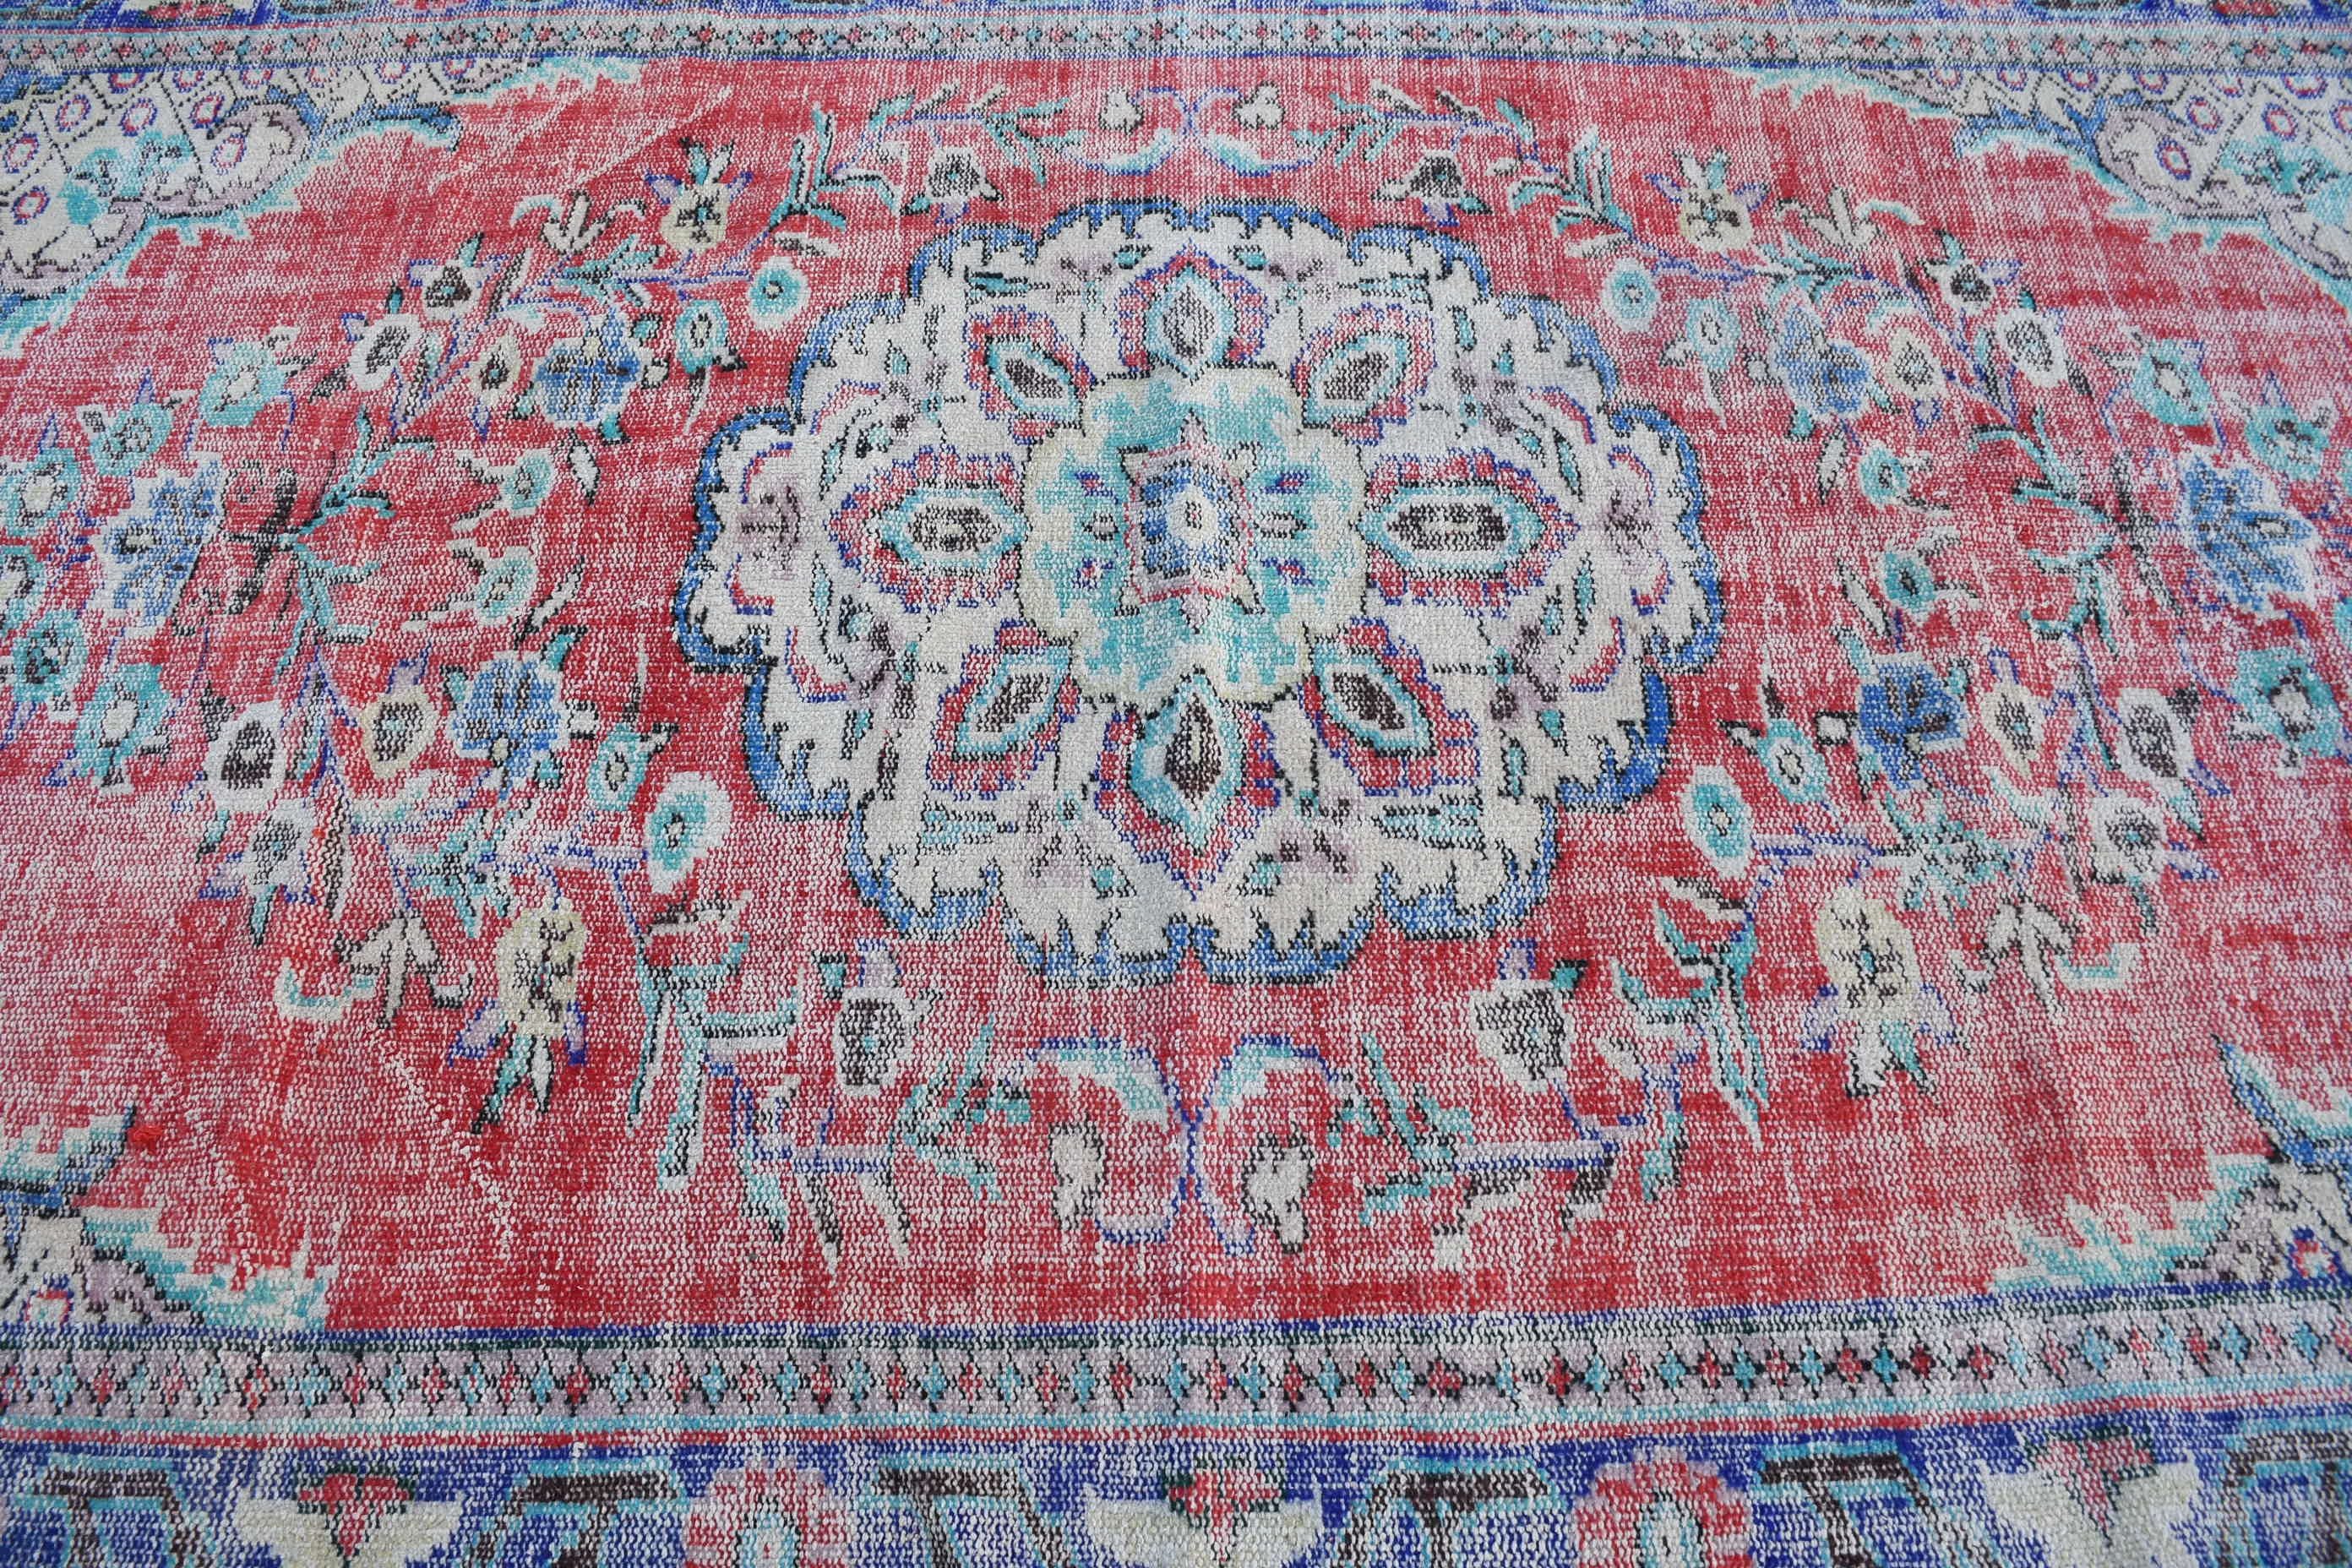 Antique Rug, Red Oriental Rug, 6.1x9.8 ft Large Rugs, Turkish Rug, Vintage Rugs, Dining Room Rugs, Bedroom Rug, Rugs for Living Room